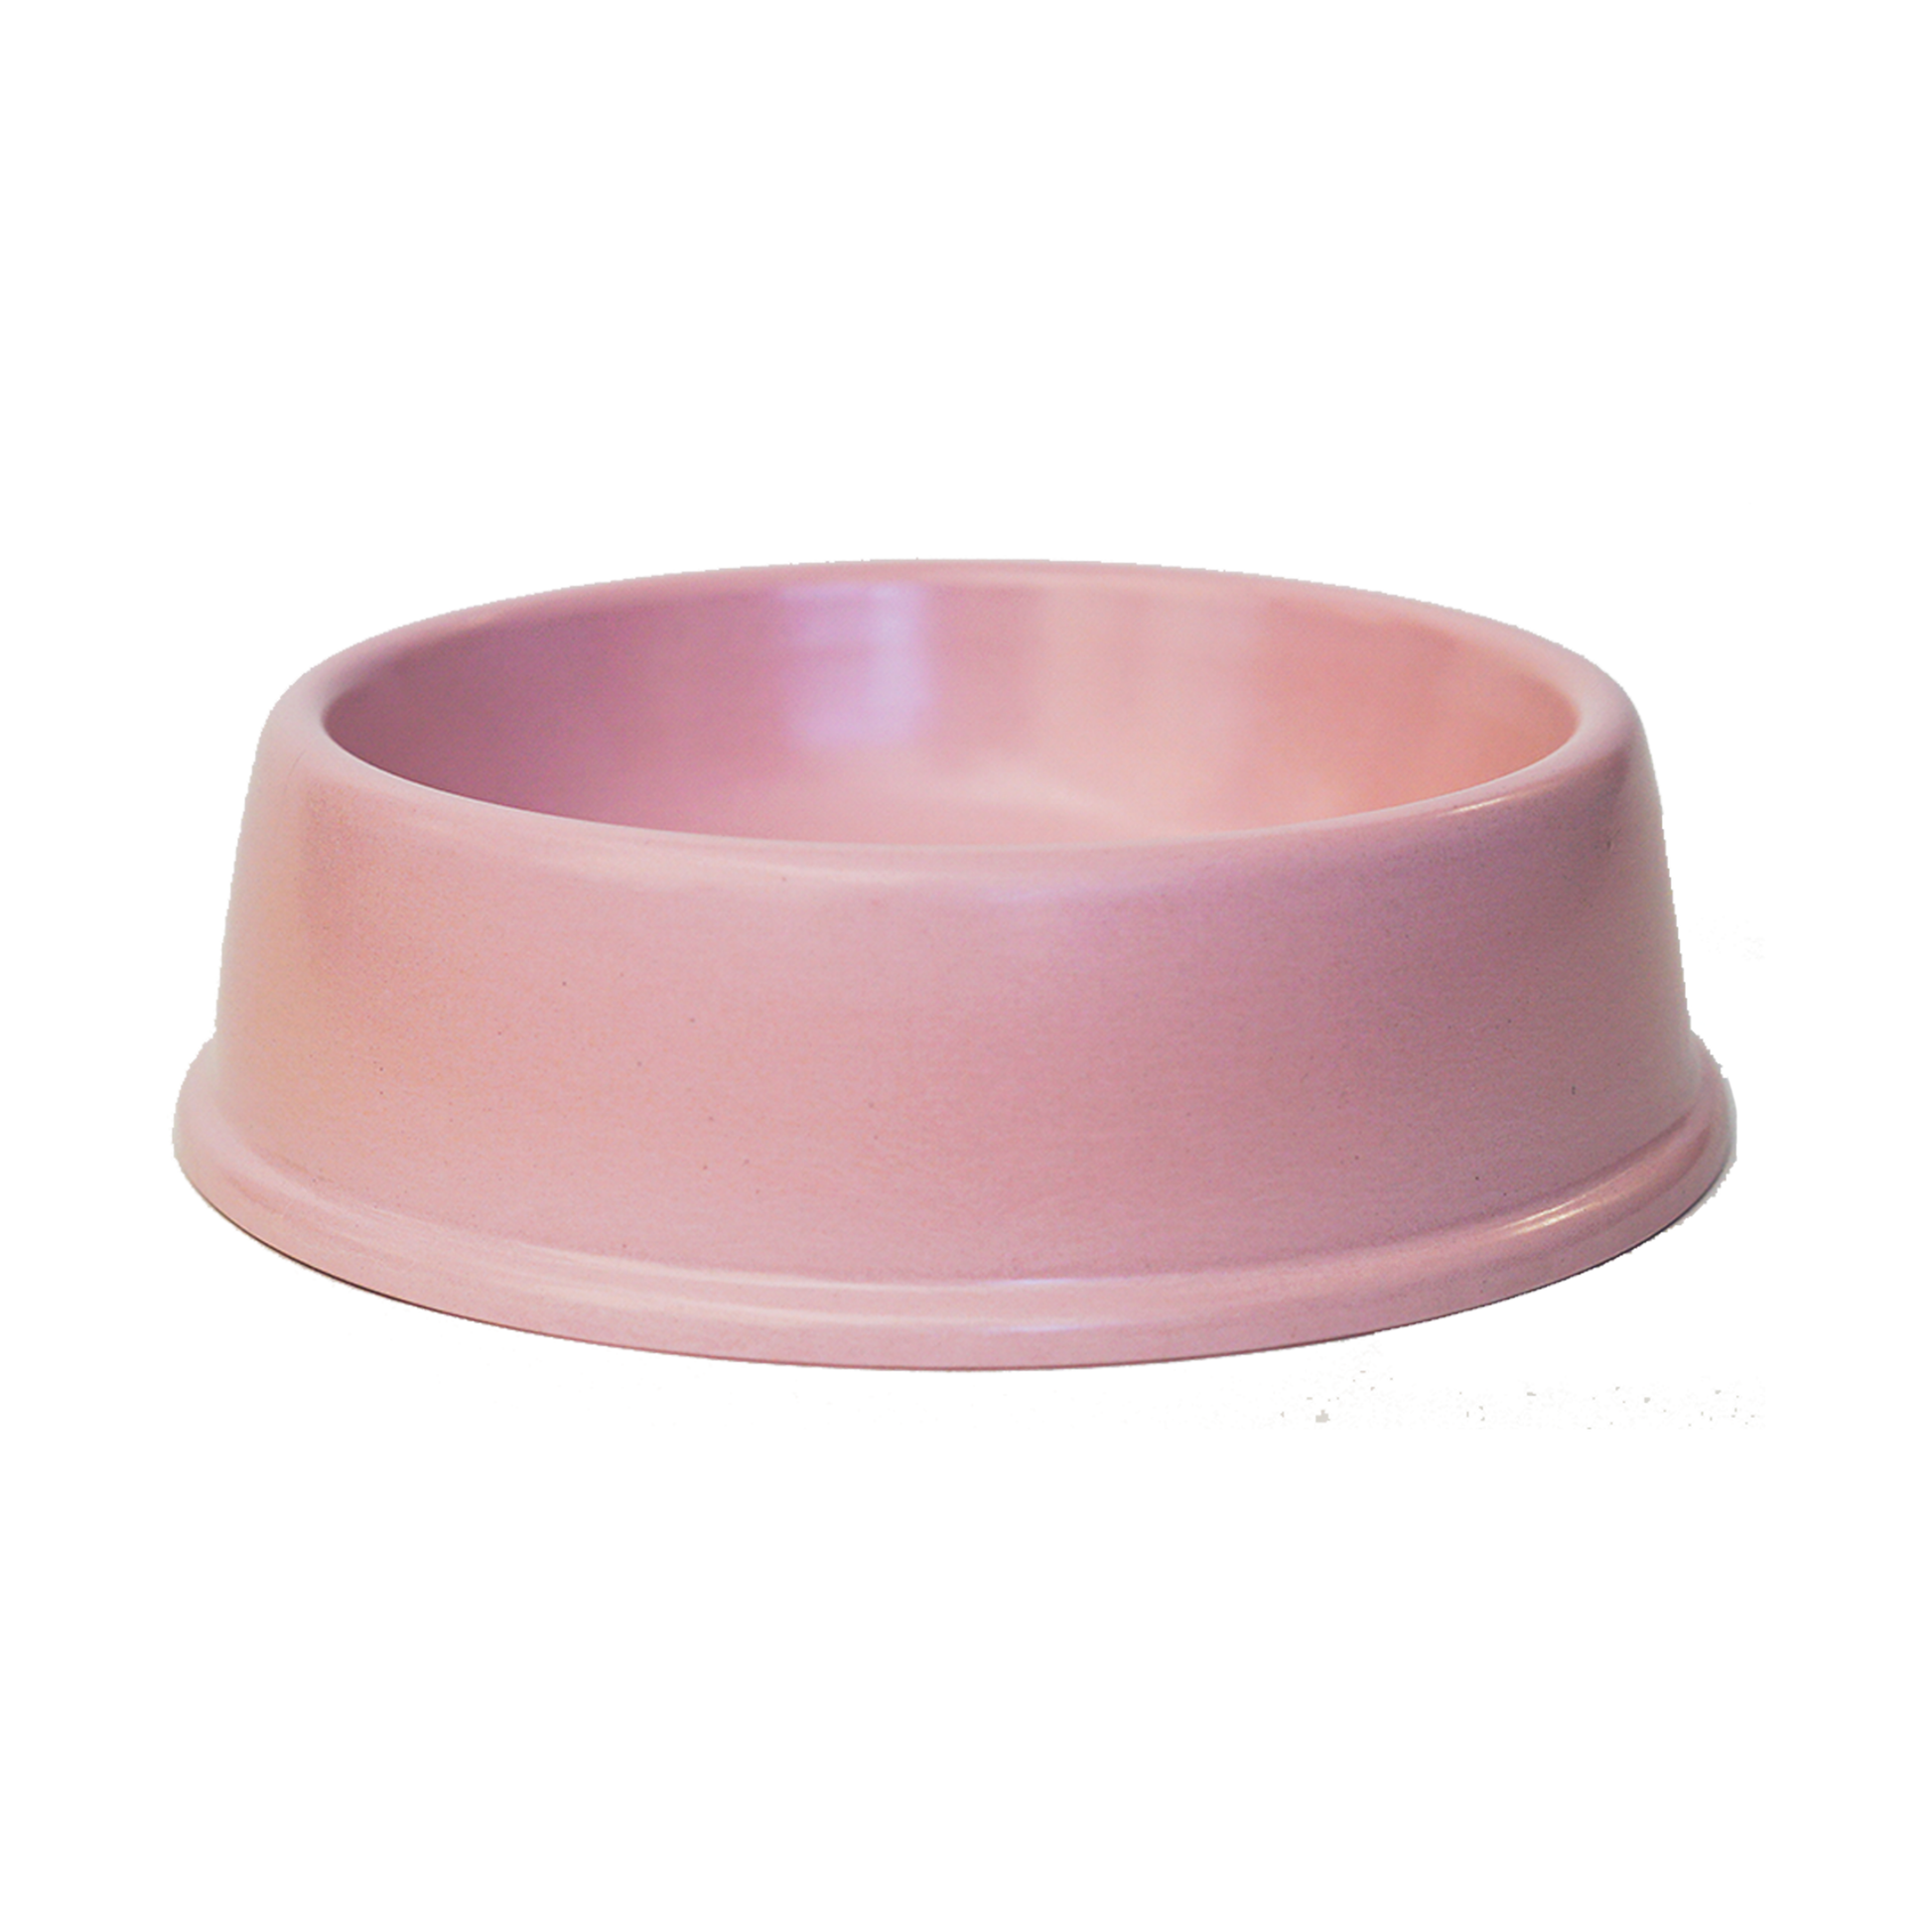 Dog bowls - Large Plastic Dog Bowl - Puppy bowls - 2 Pack - Color May Vary  - Dog Bowl